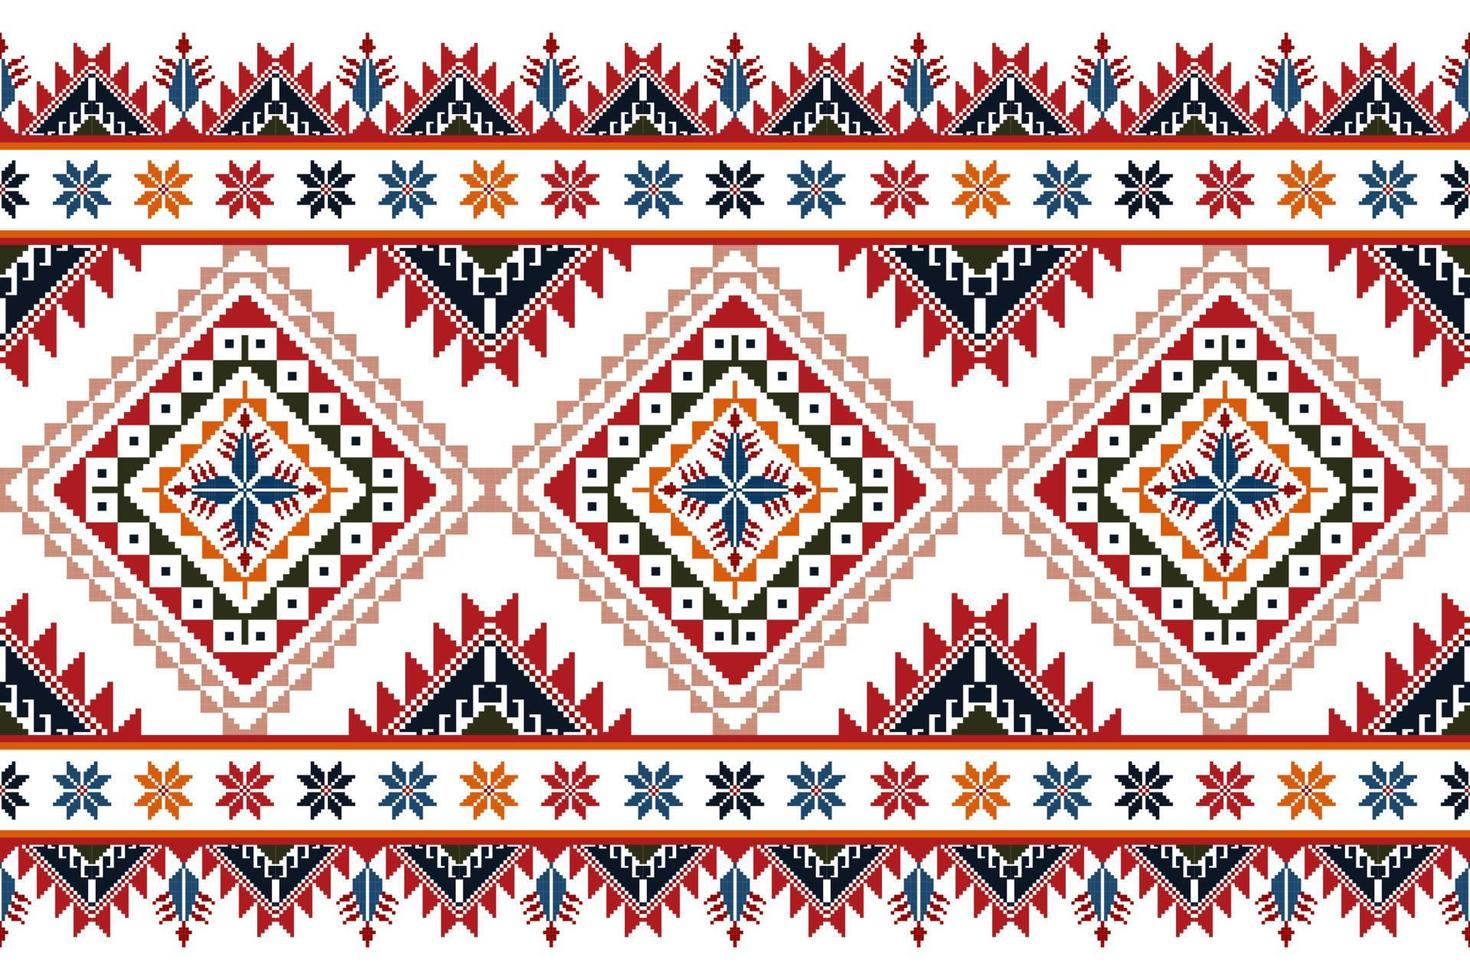 Tartreez Palestinian abstract geometric ethnic textile pattern design. Aztec fabric carpet mandala ornaments textile decorations wallpaper. Tribal boho native seamless textile traditional embroidery vector